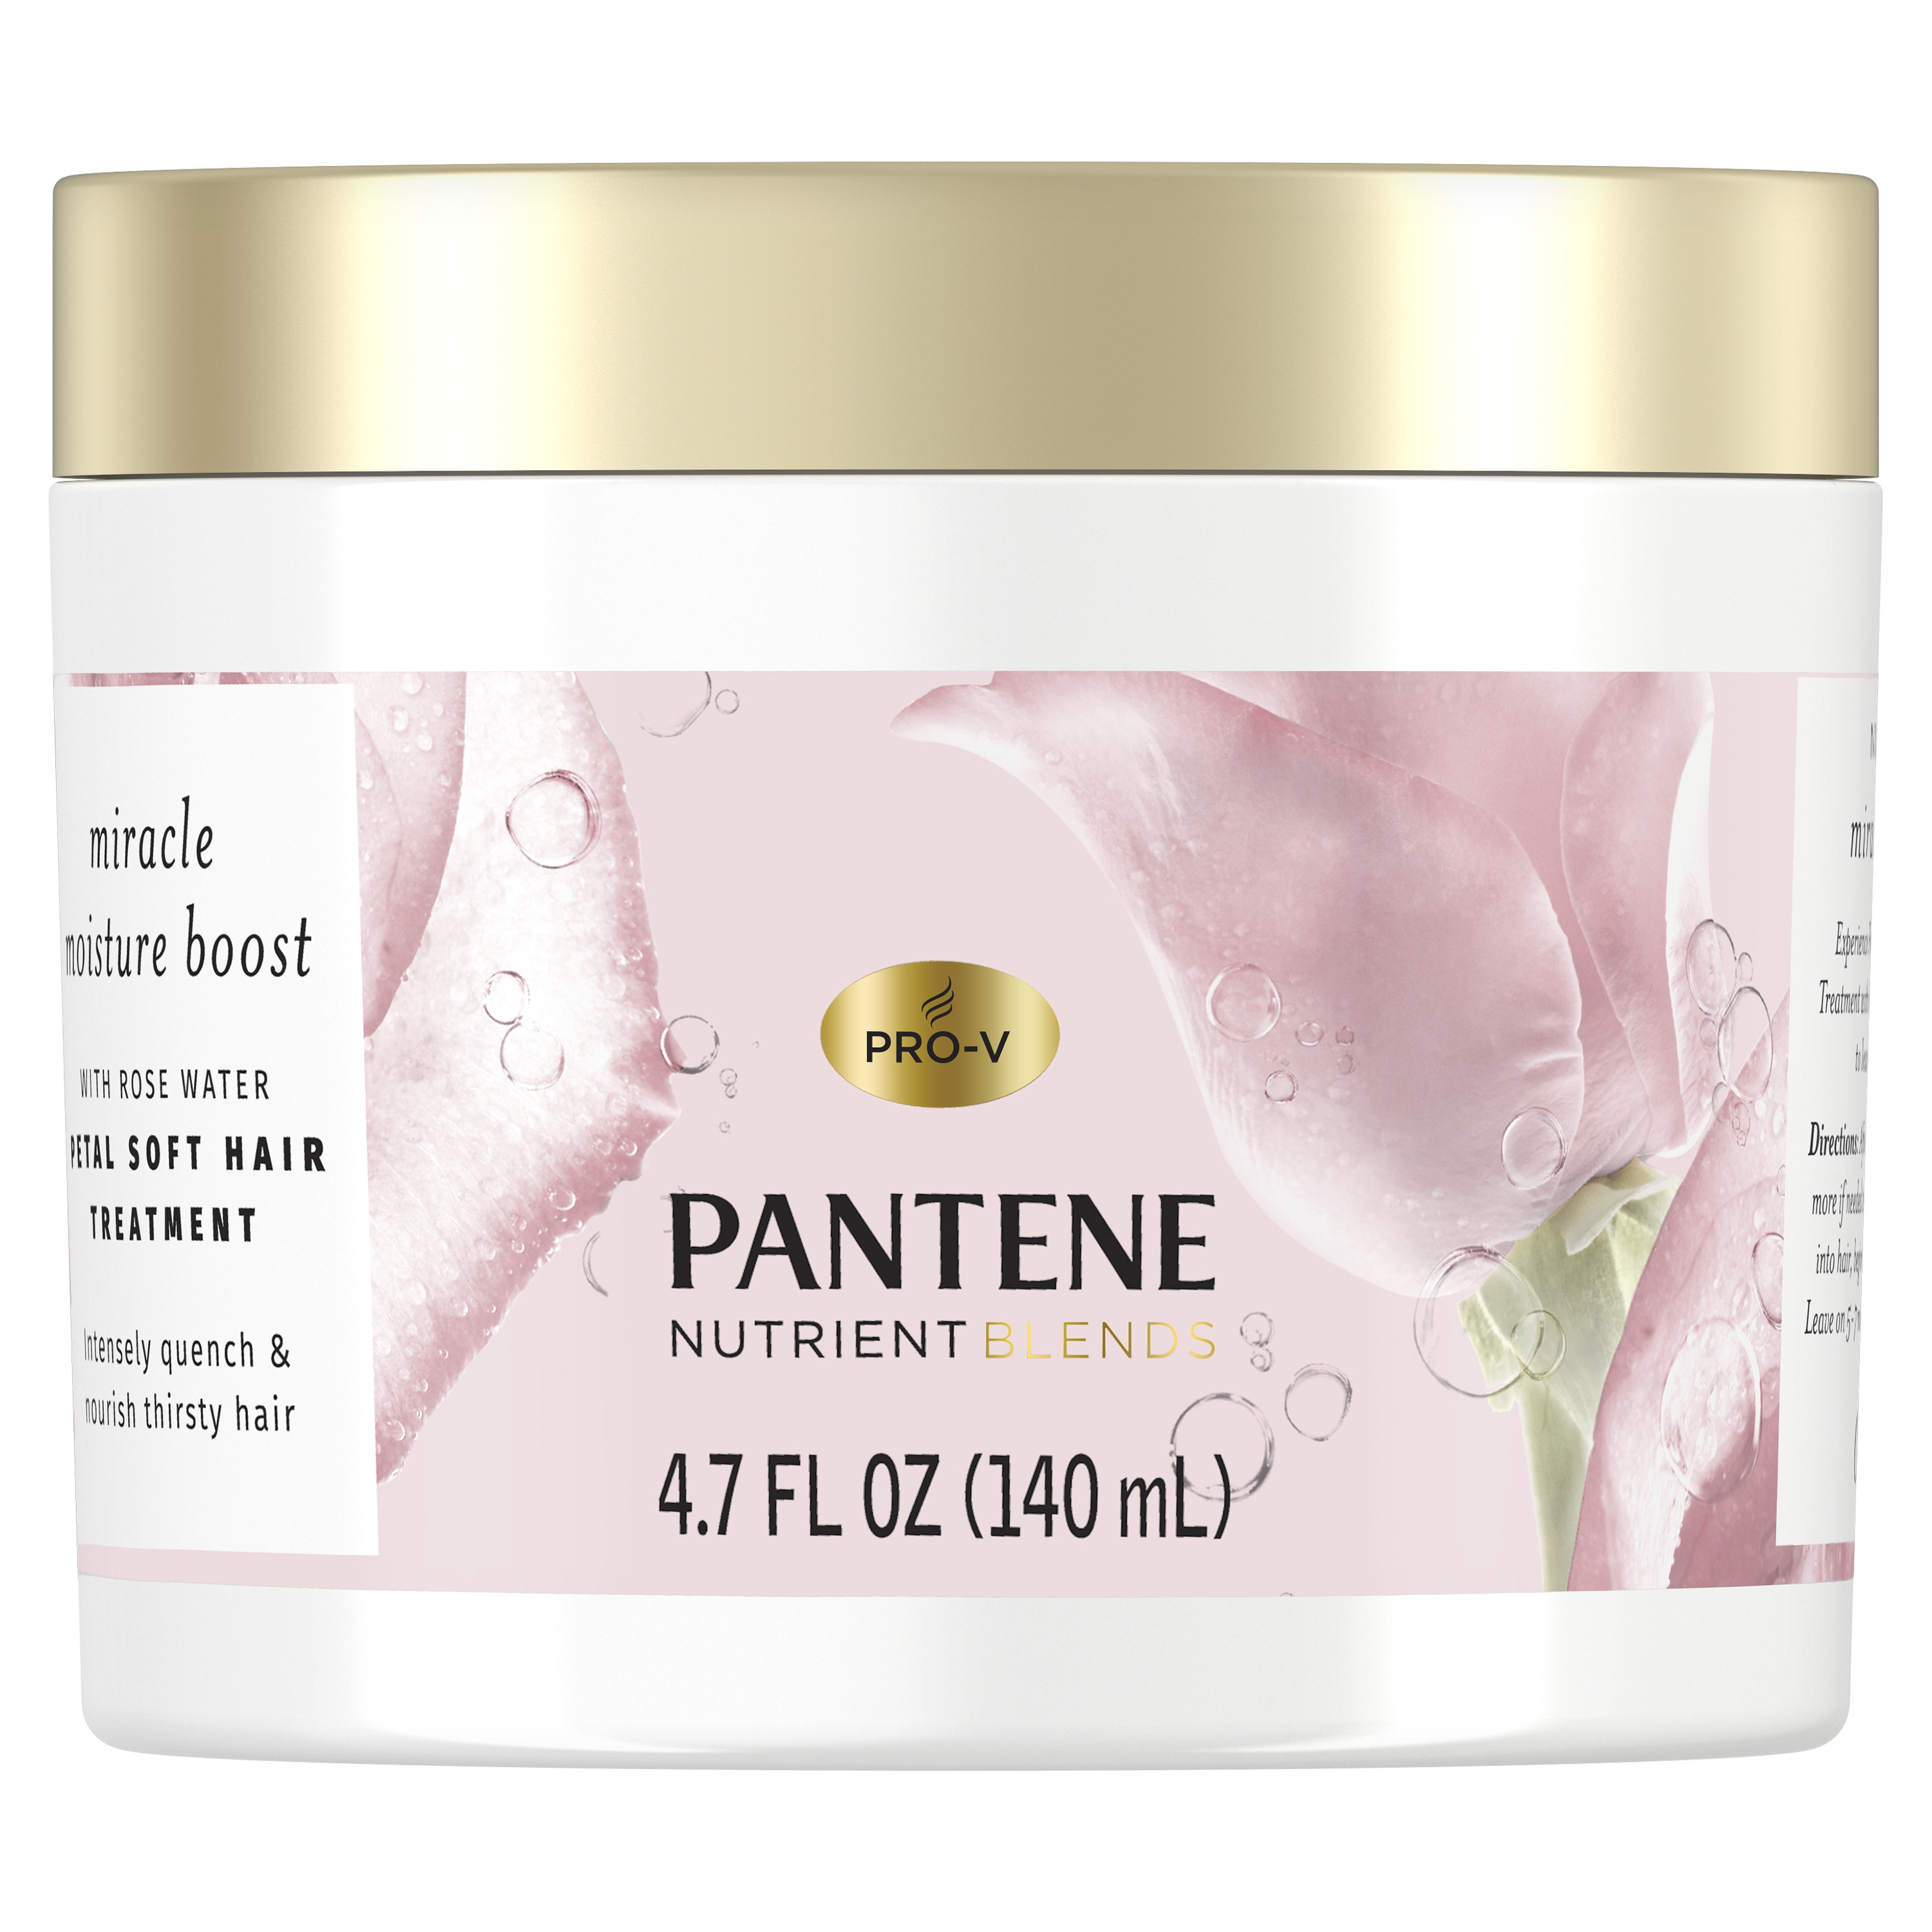 Pantene Nutrient Blends Rose Water Treatment, Moisture Boost, 4.7 oz - image 1 of 11